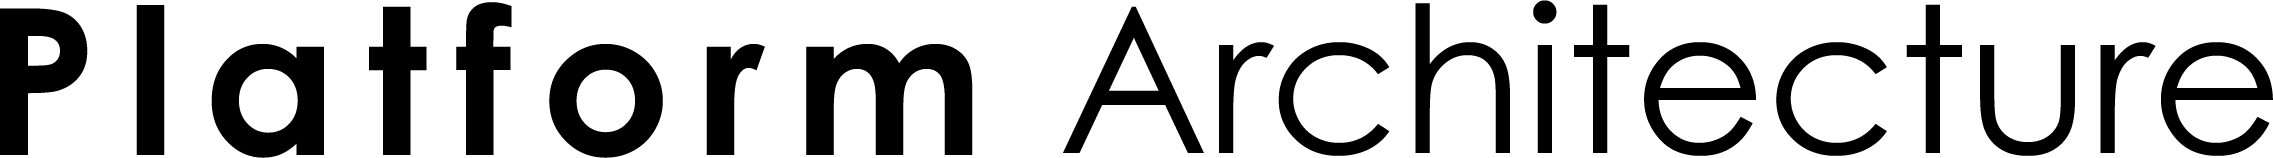 Platform Architecture logo